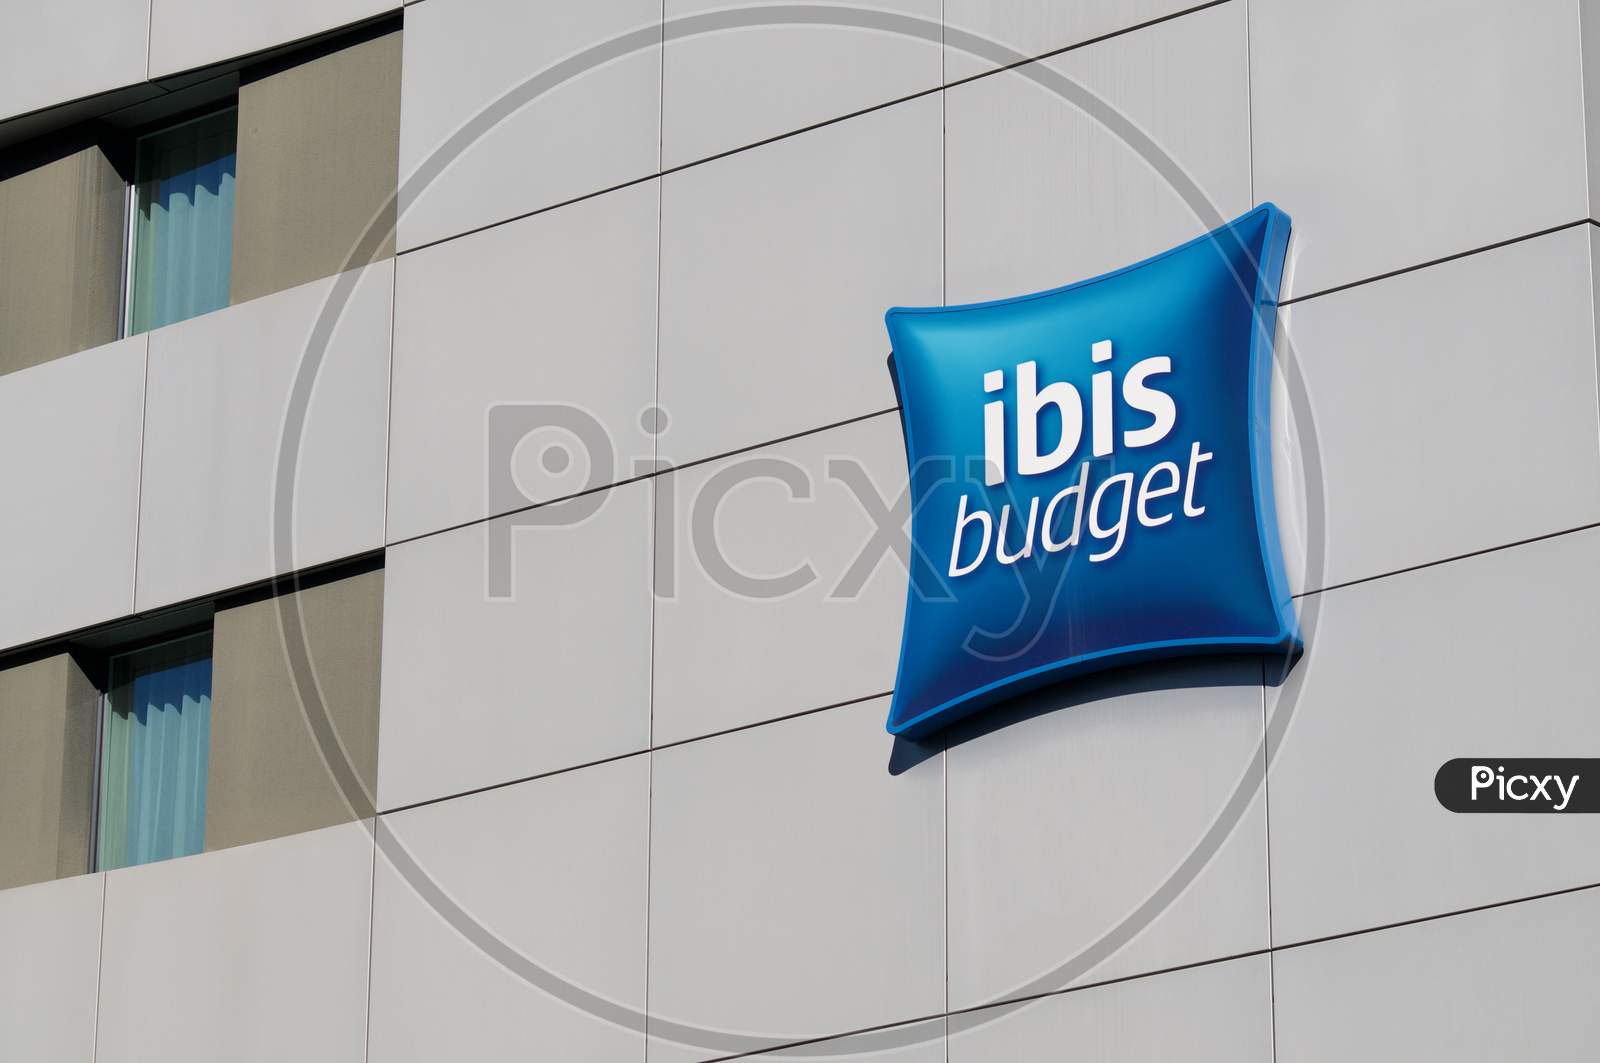 Ibis Budget Sign Hanging On Hotel Building In Lugano, Switzerland